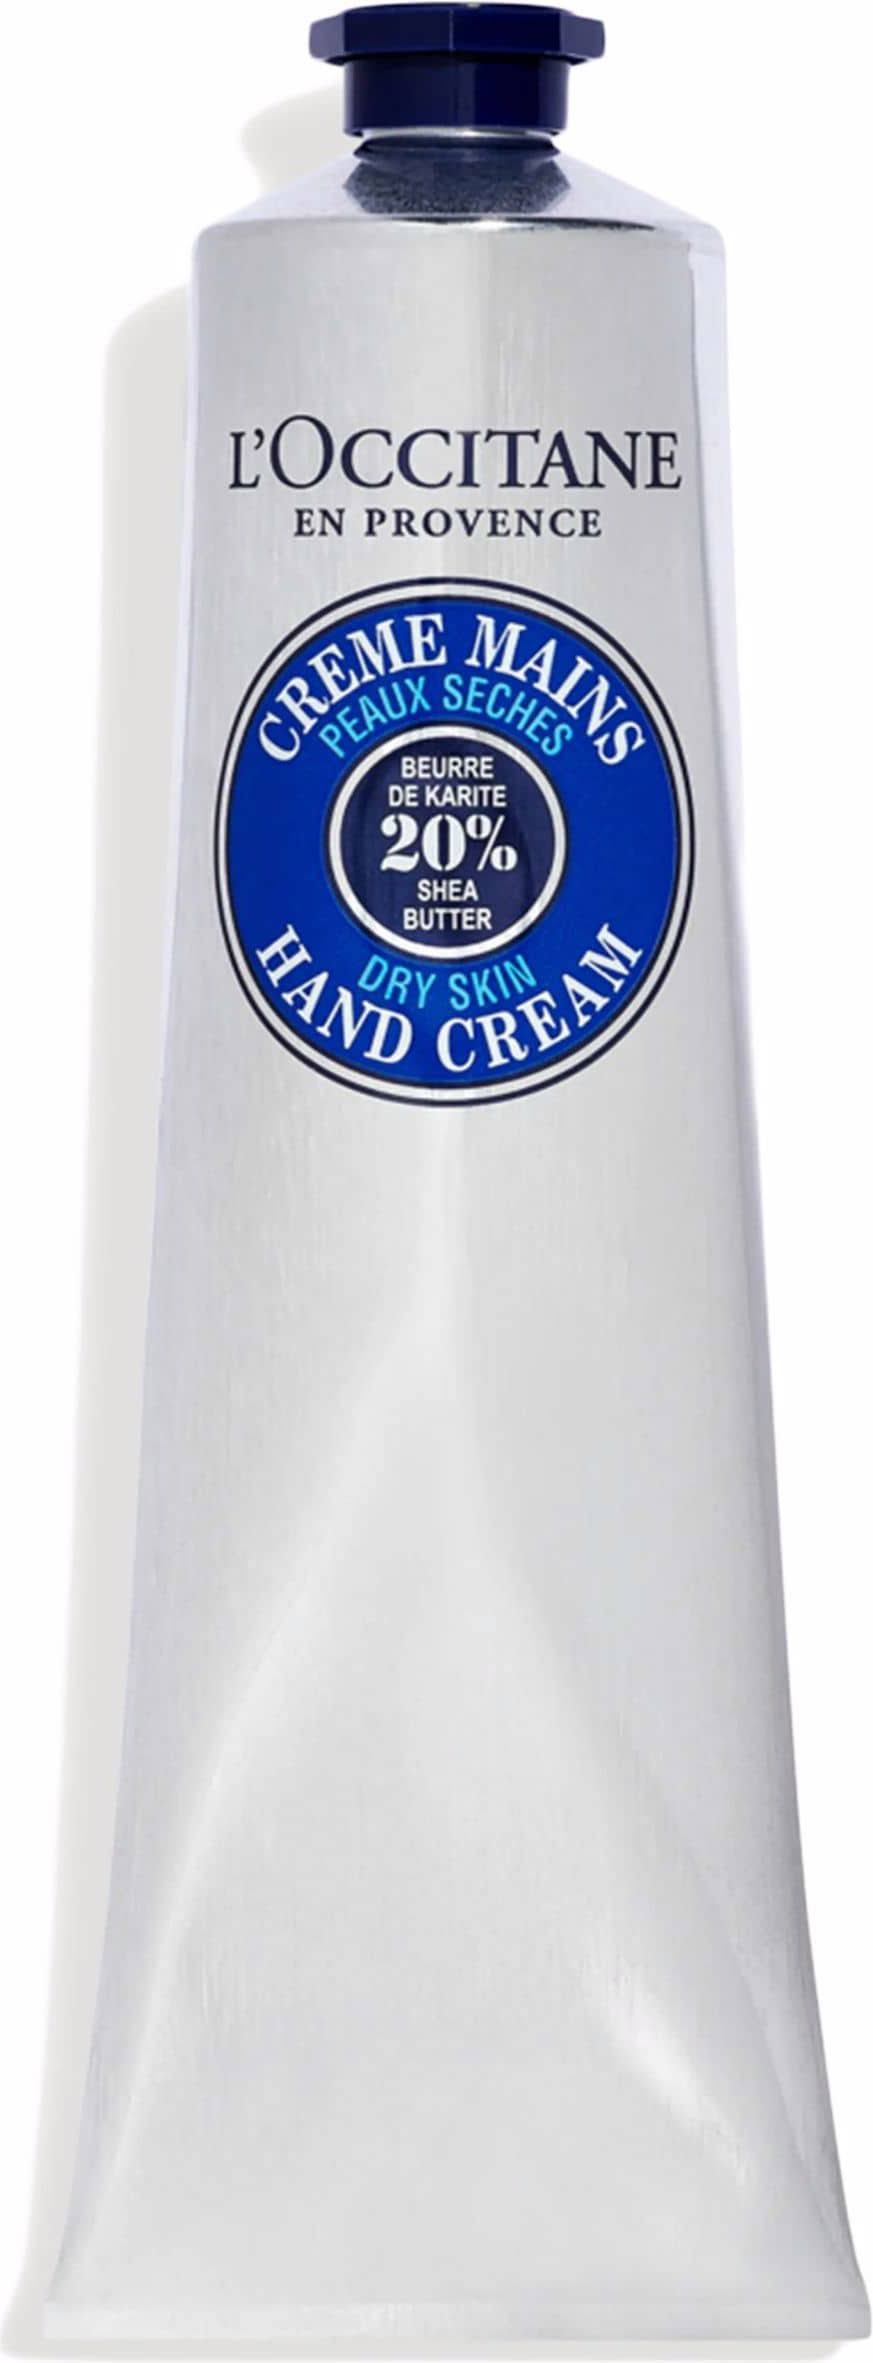 L'Occitane Shea Butter Hand Cream 150 ml